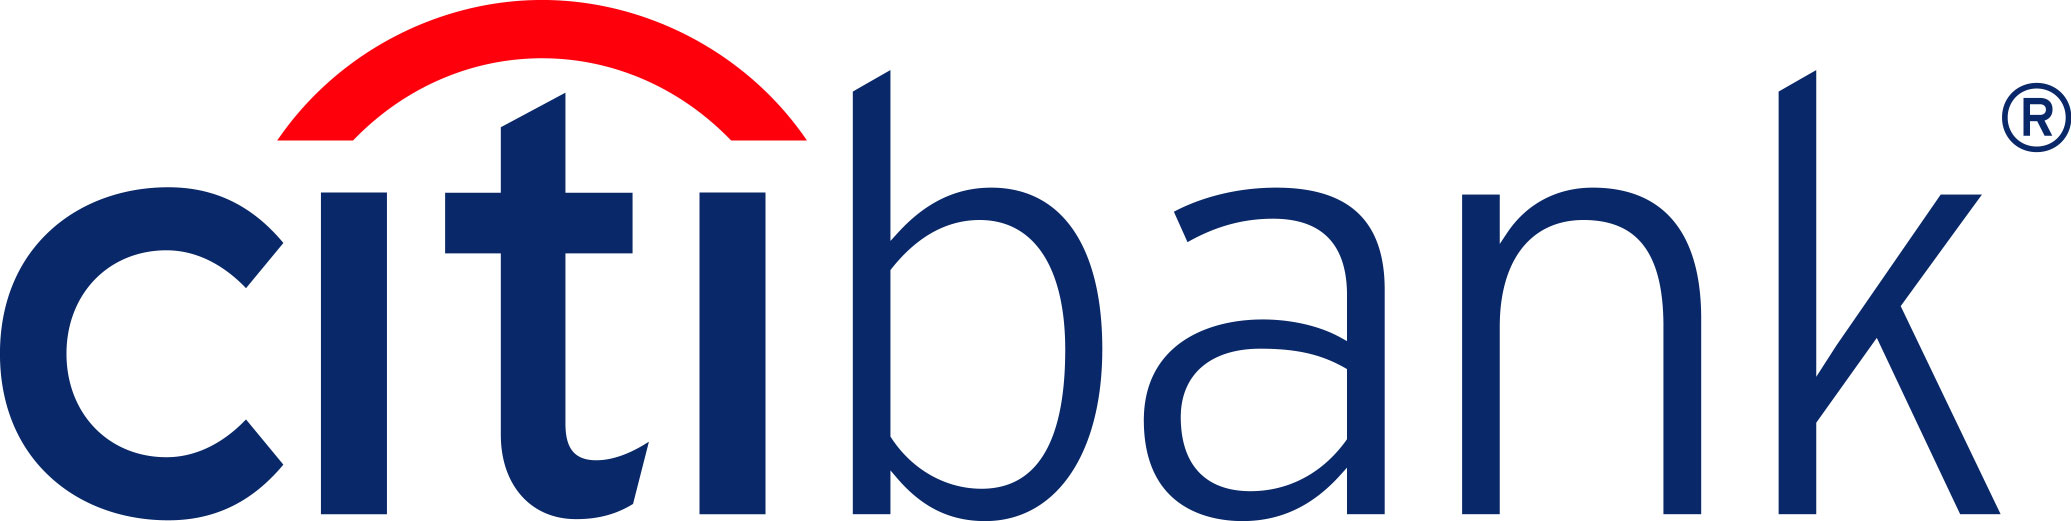 Citibank_logo.jpg